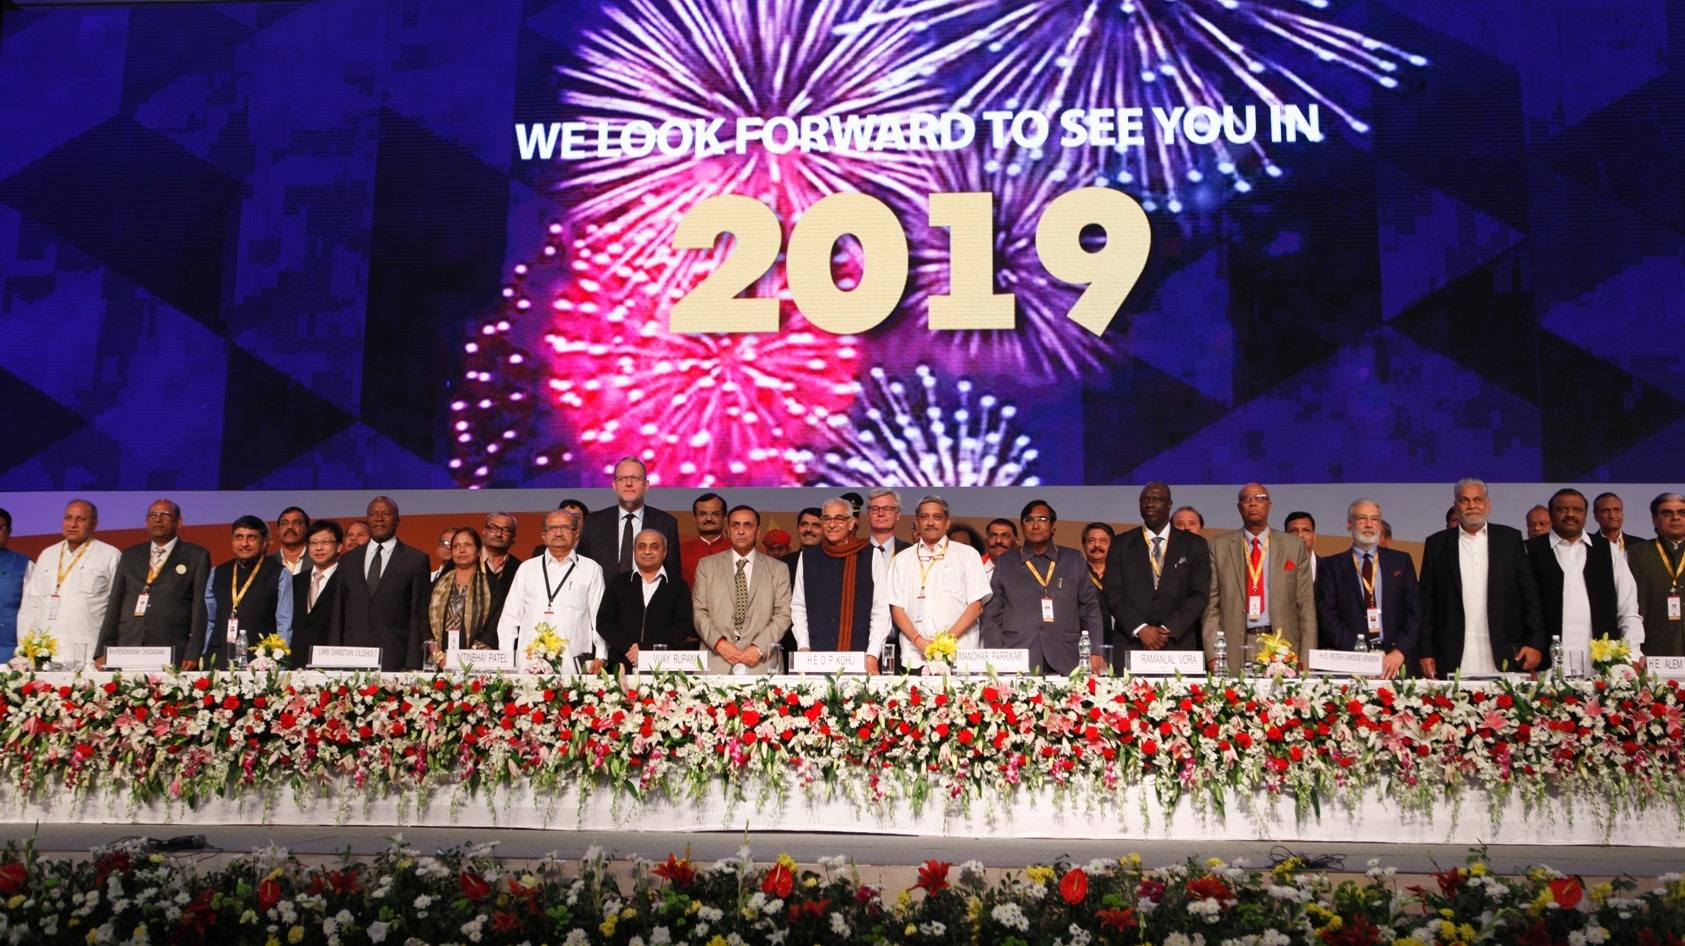 Rs. 77.90 crore spent on Vibrant Gujarat Summit 2019